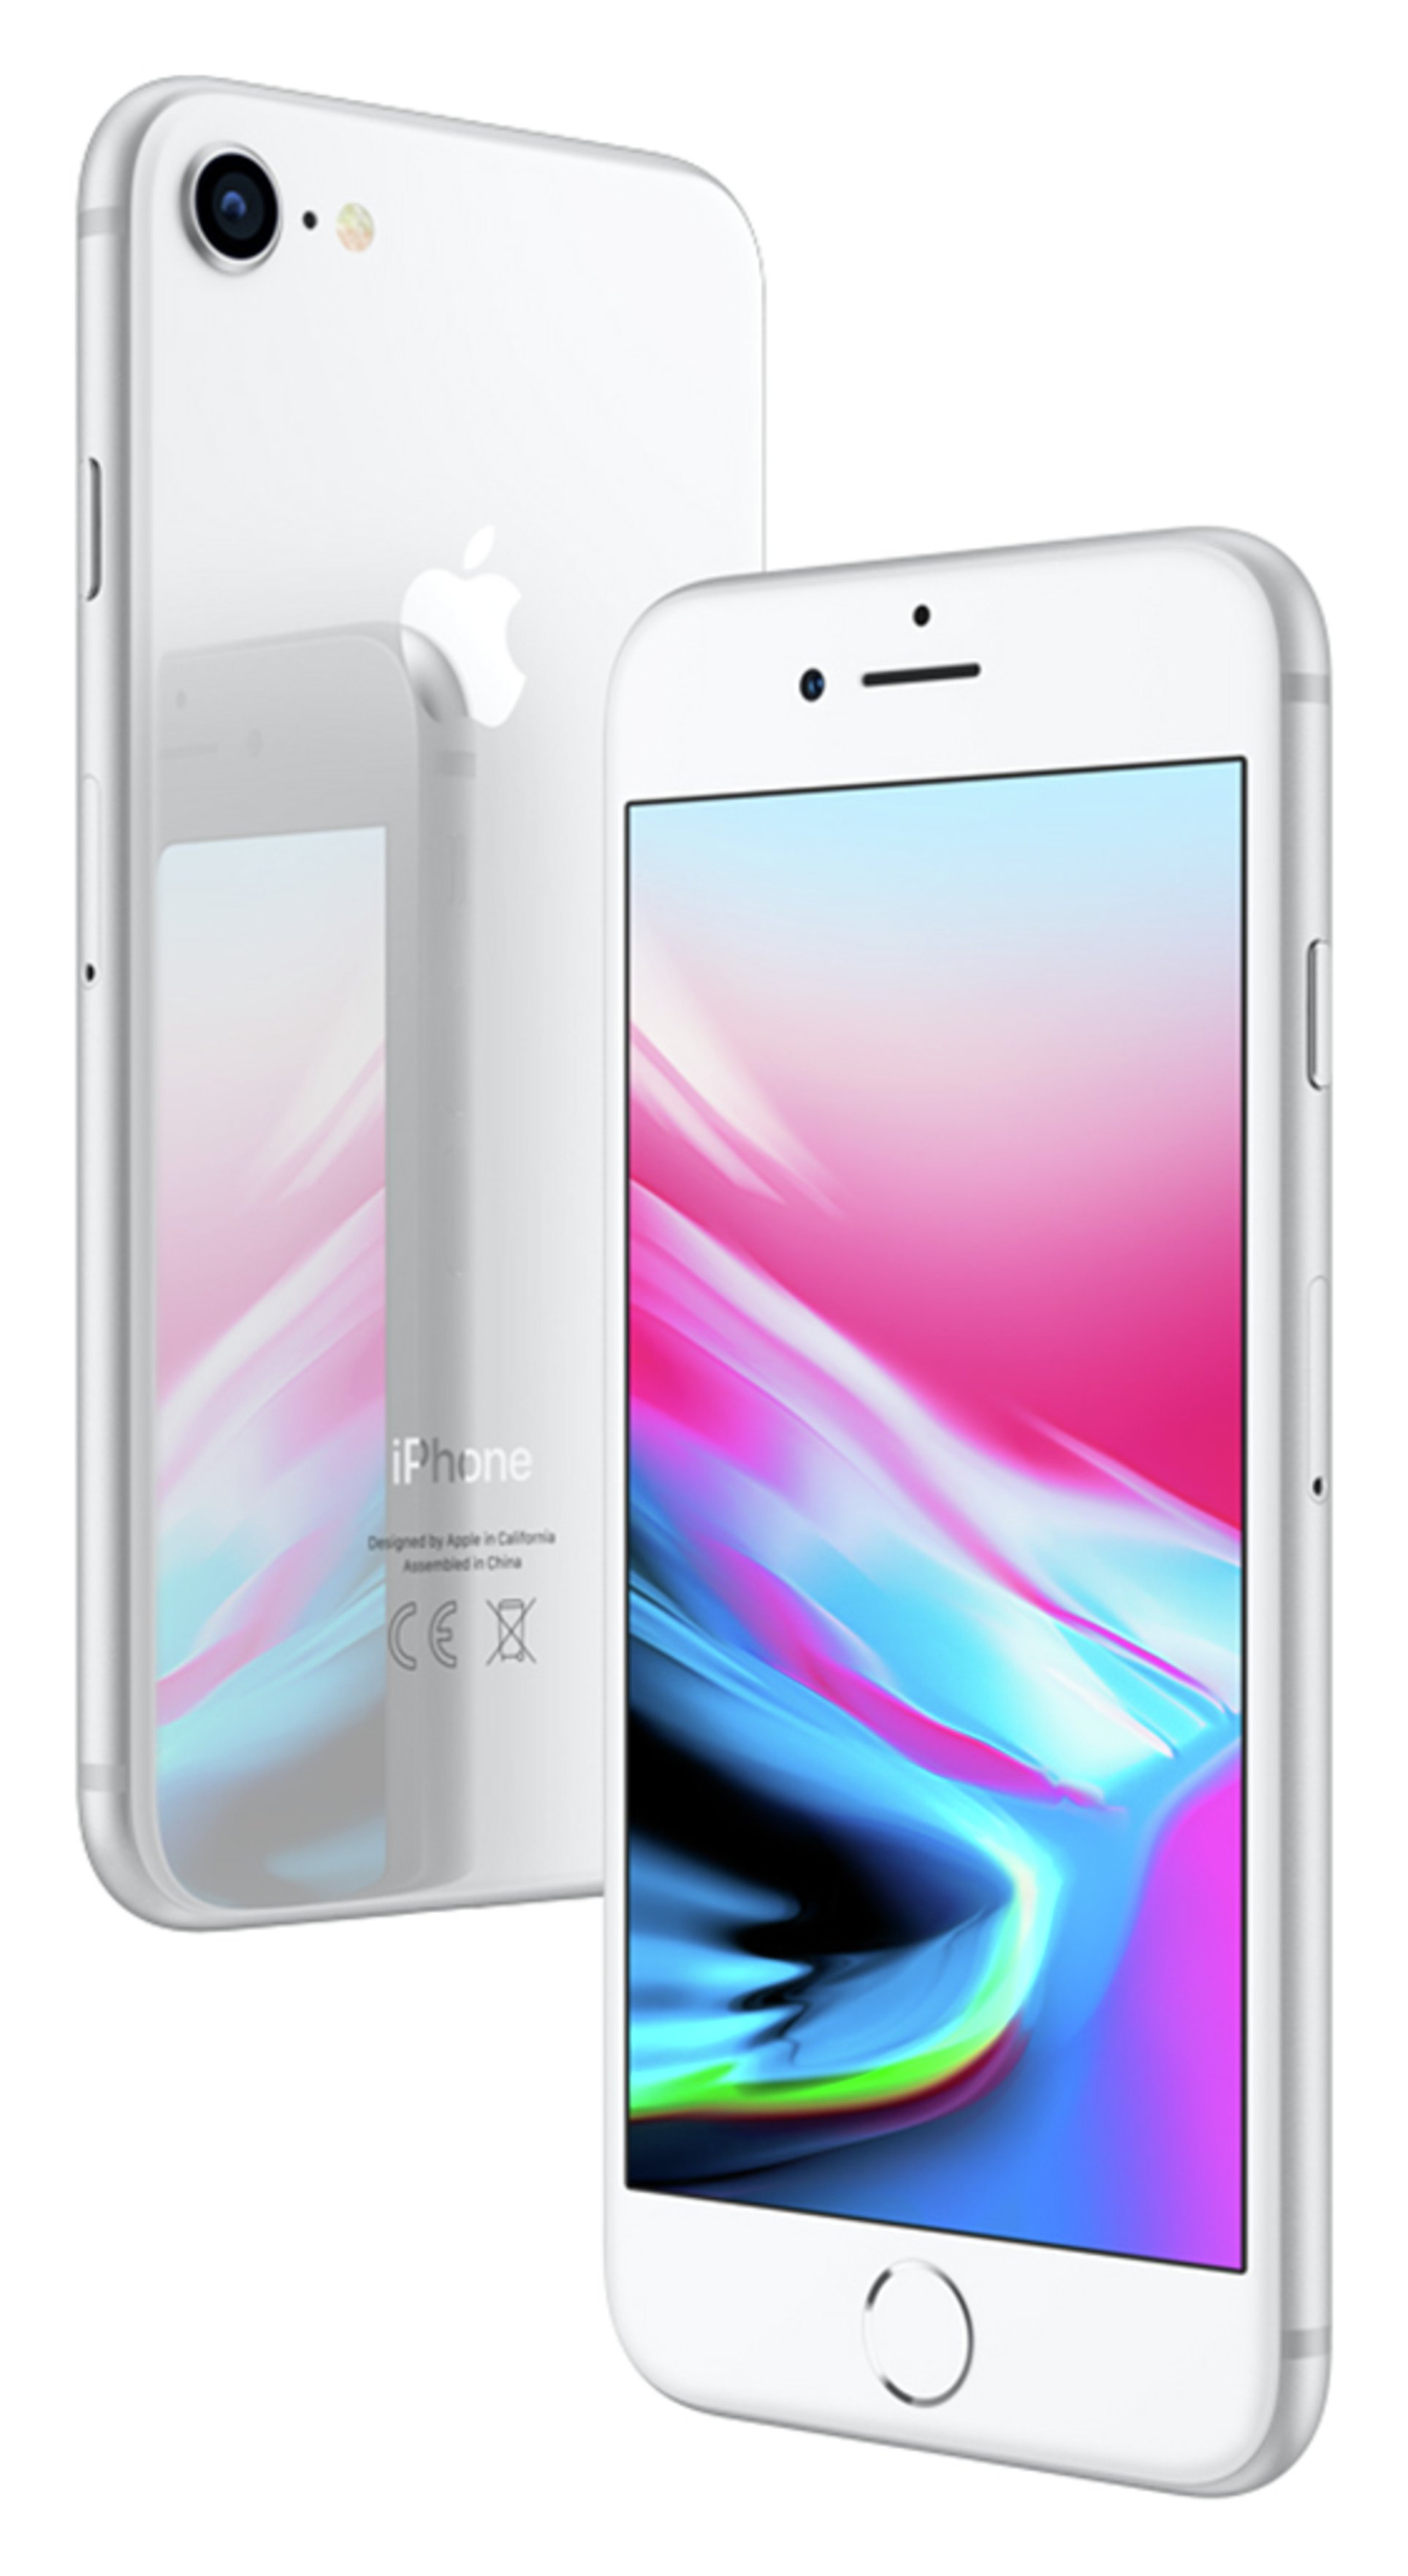 SIM Free iPhone 8 64GB Mobile Phone review